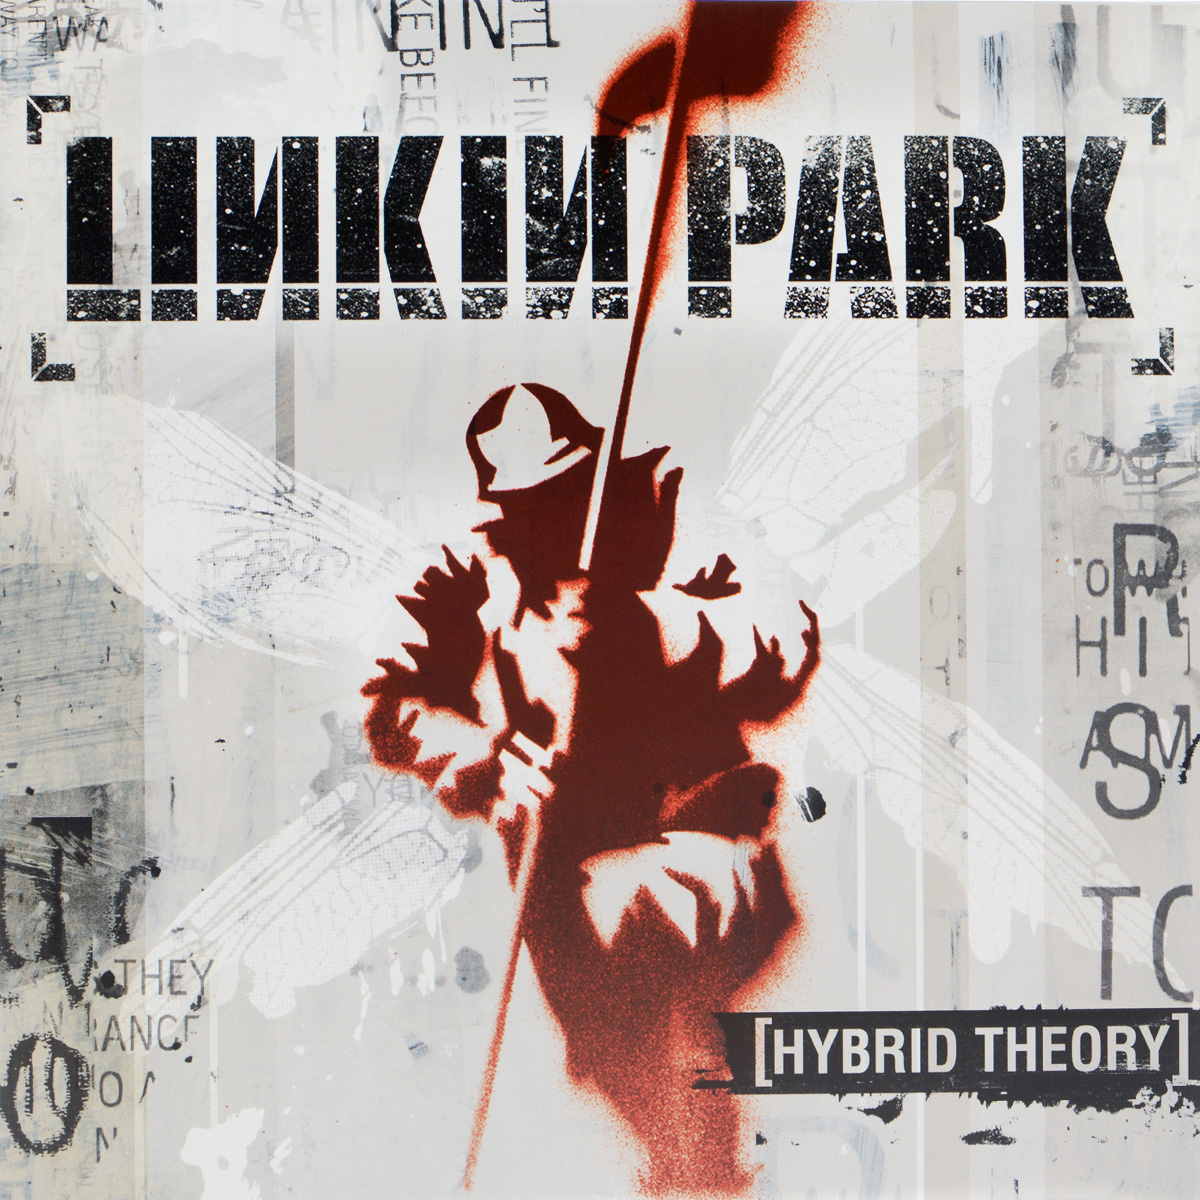 linkin park hybrid theory full album torrent download